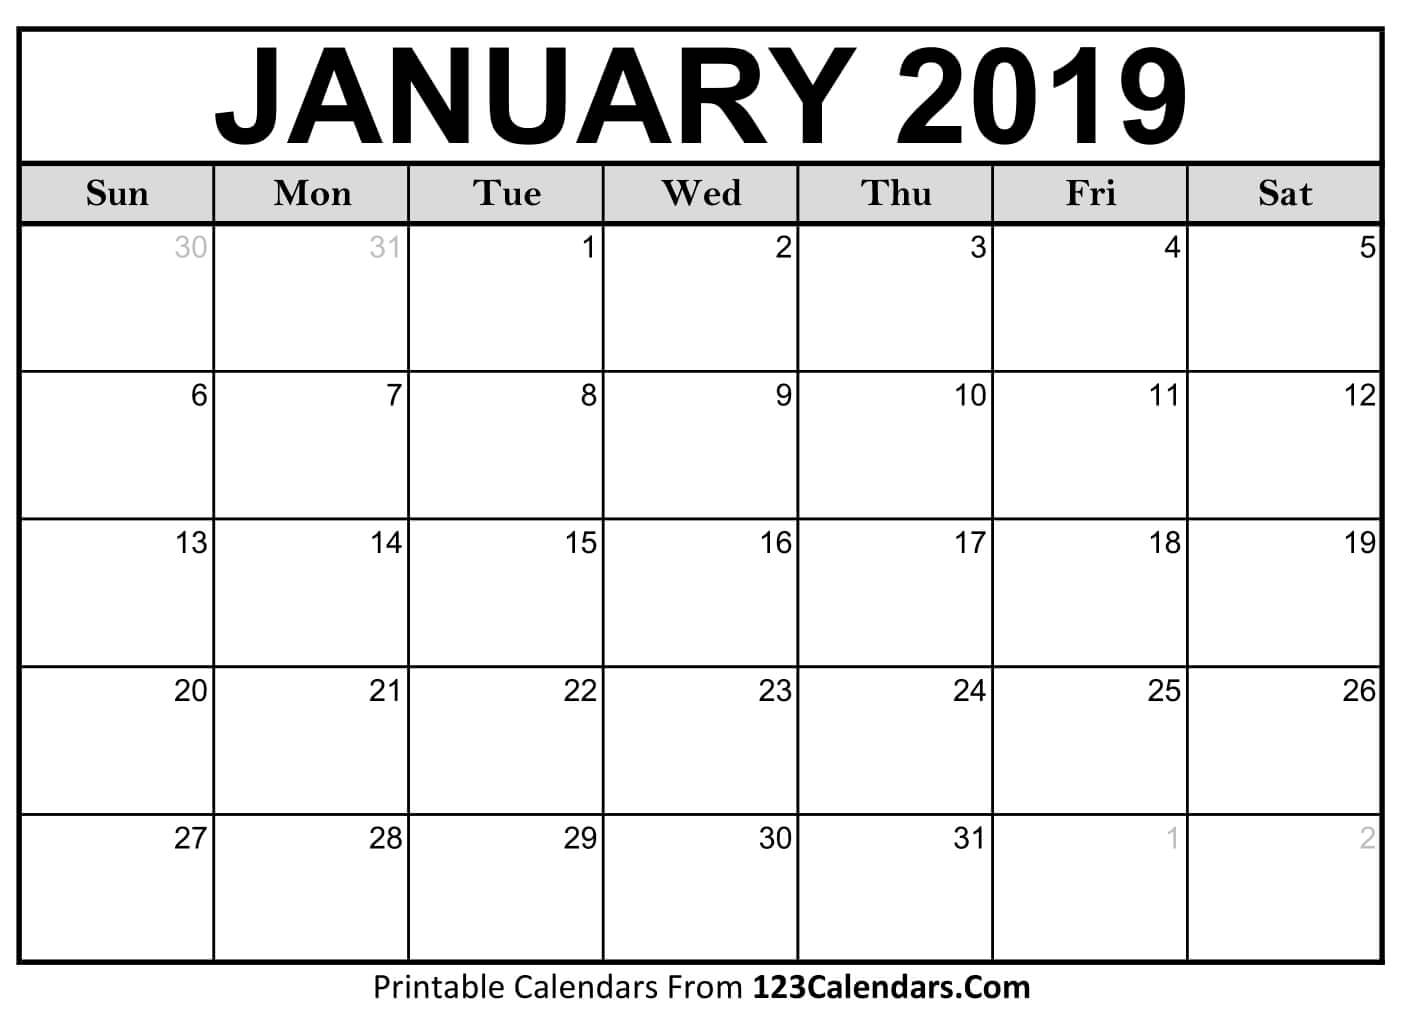 Printable Calendars January 2019